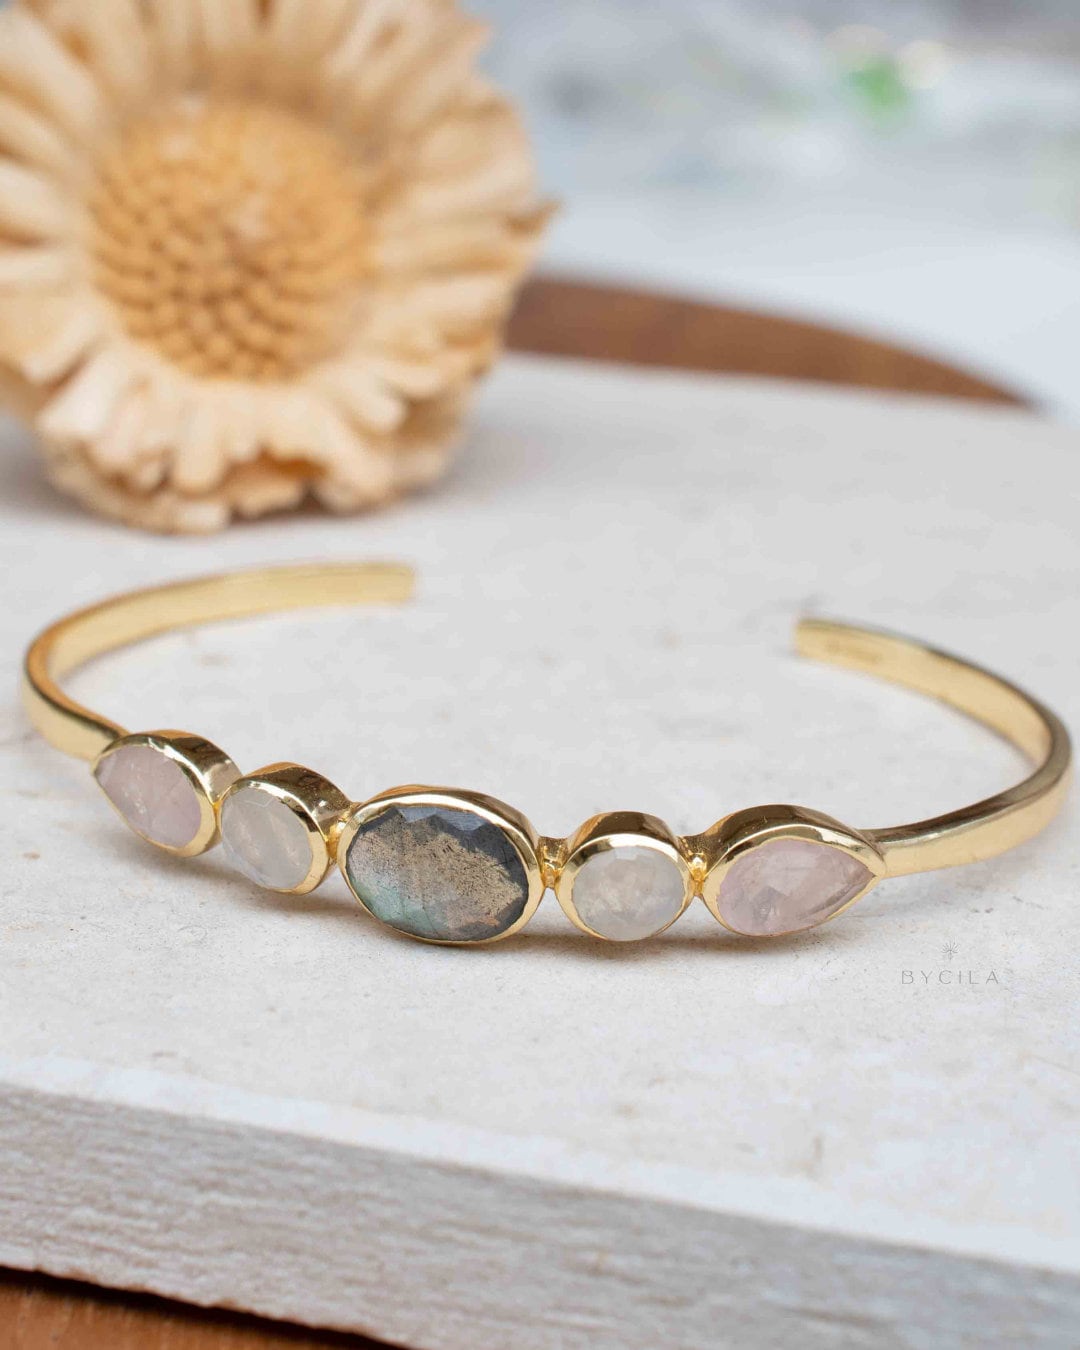 Moonstone,Labradorite & Rose Quartz Bangle Bracelet * Gold Plated * Gemstone * Adjustable * BJB041